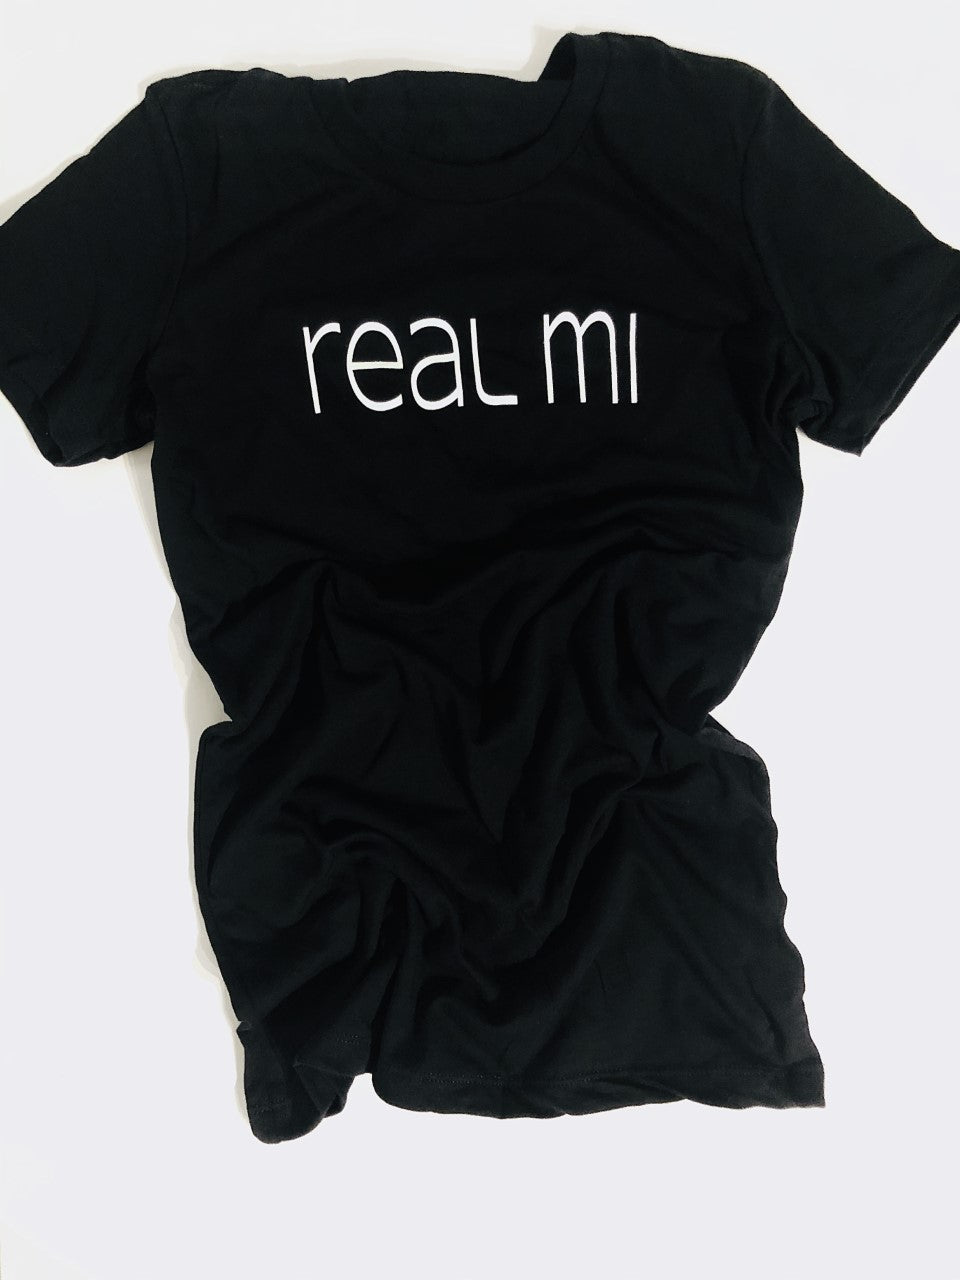 real mi t-shirt modern lifestyle apparel